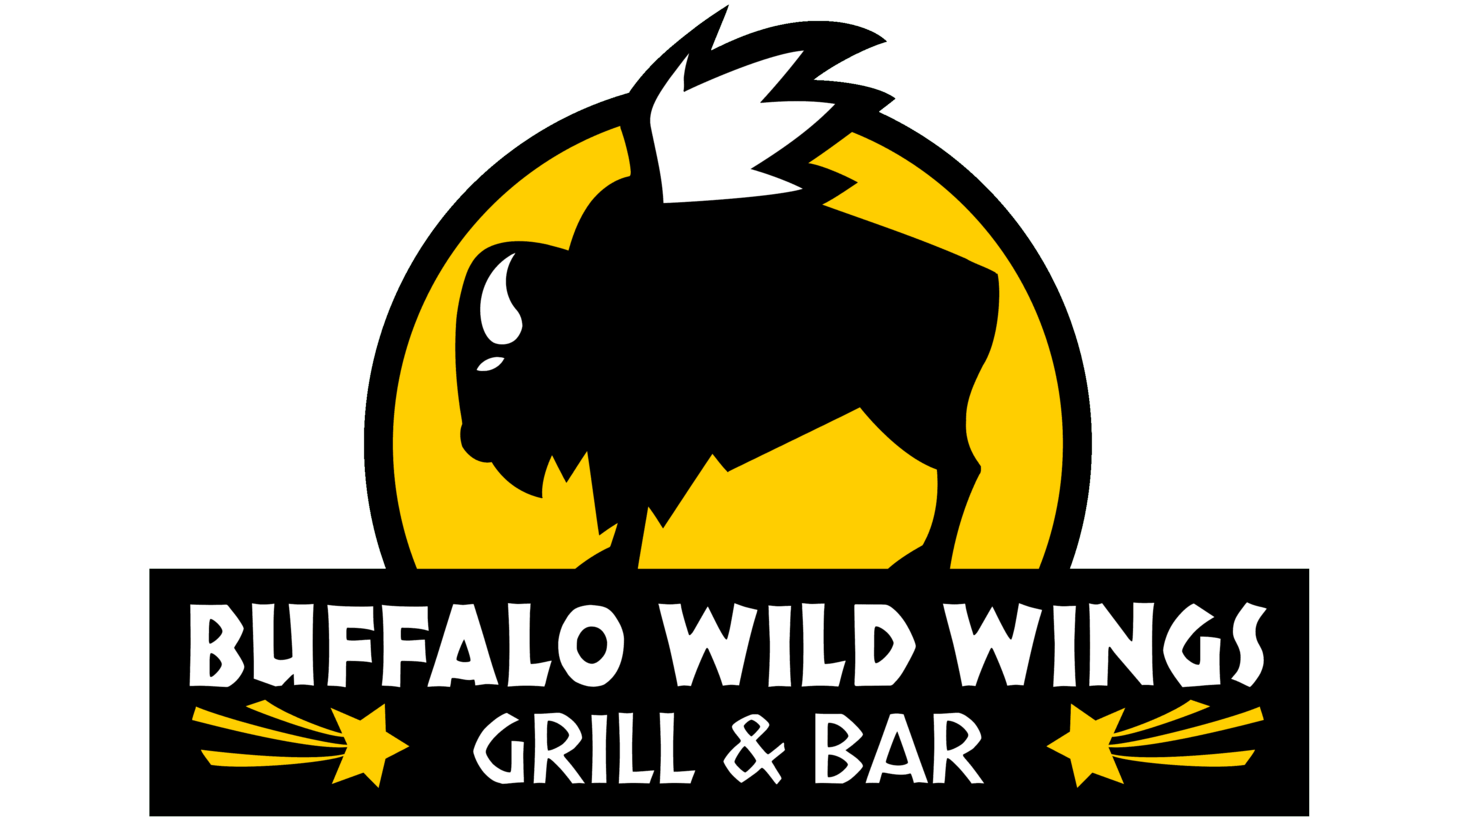 Buffalo wild wings sign 1998